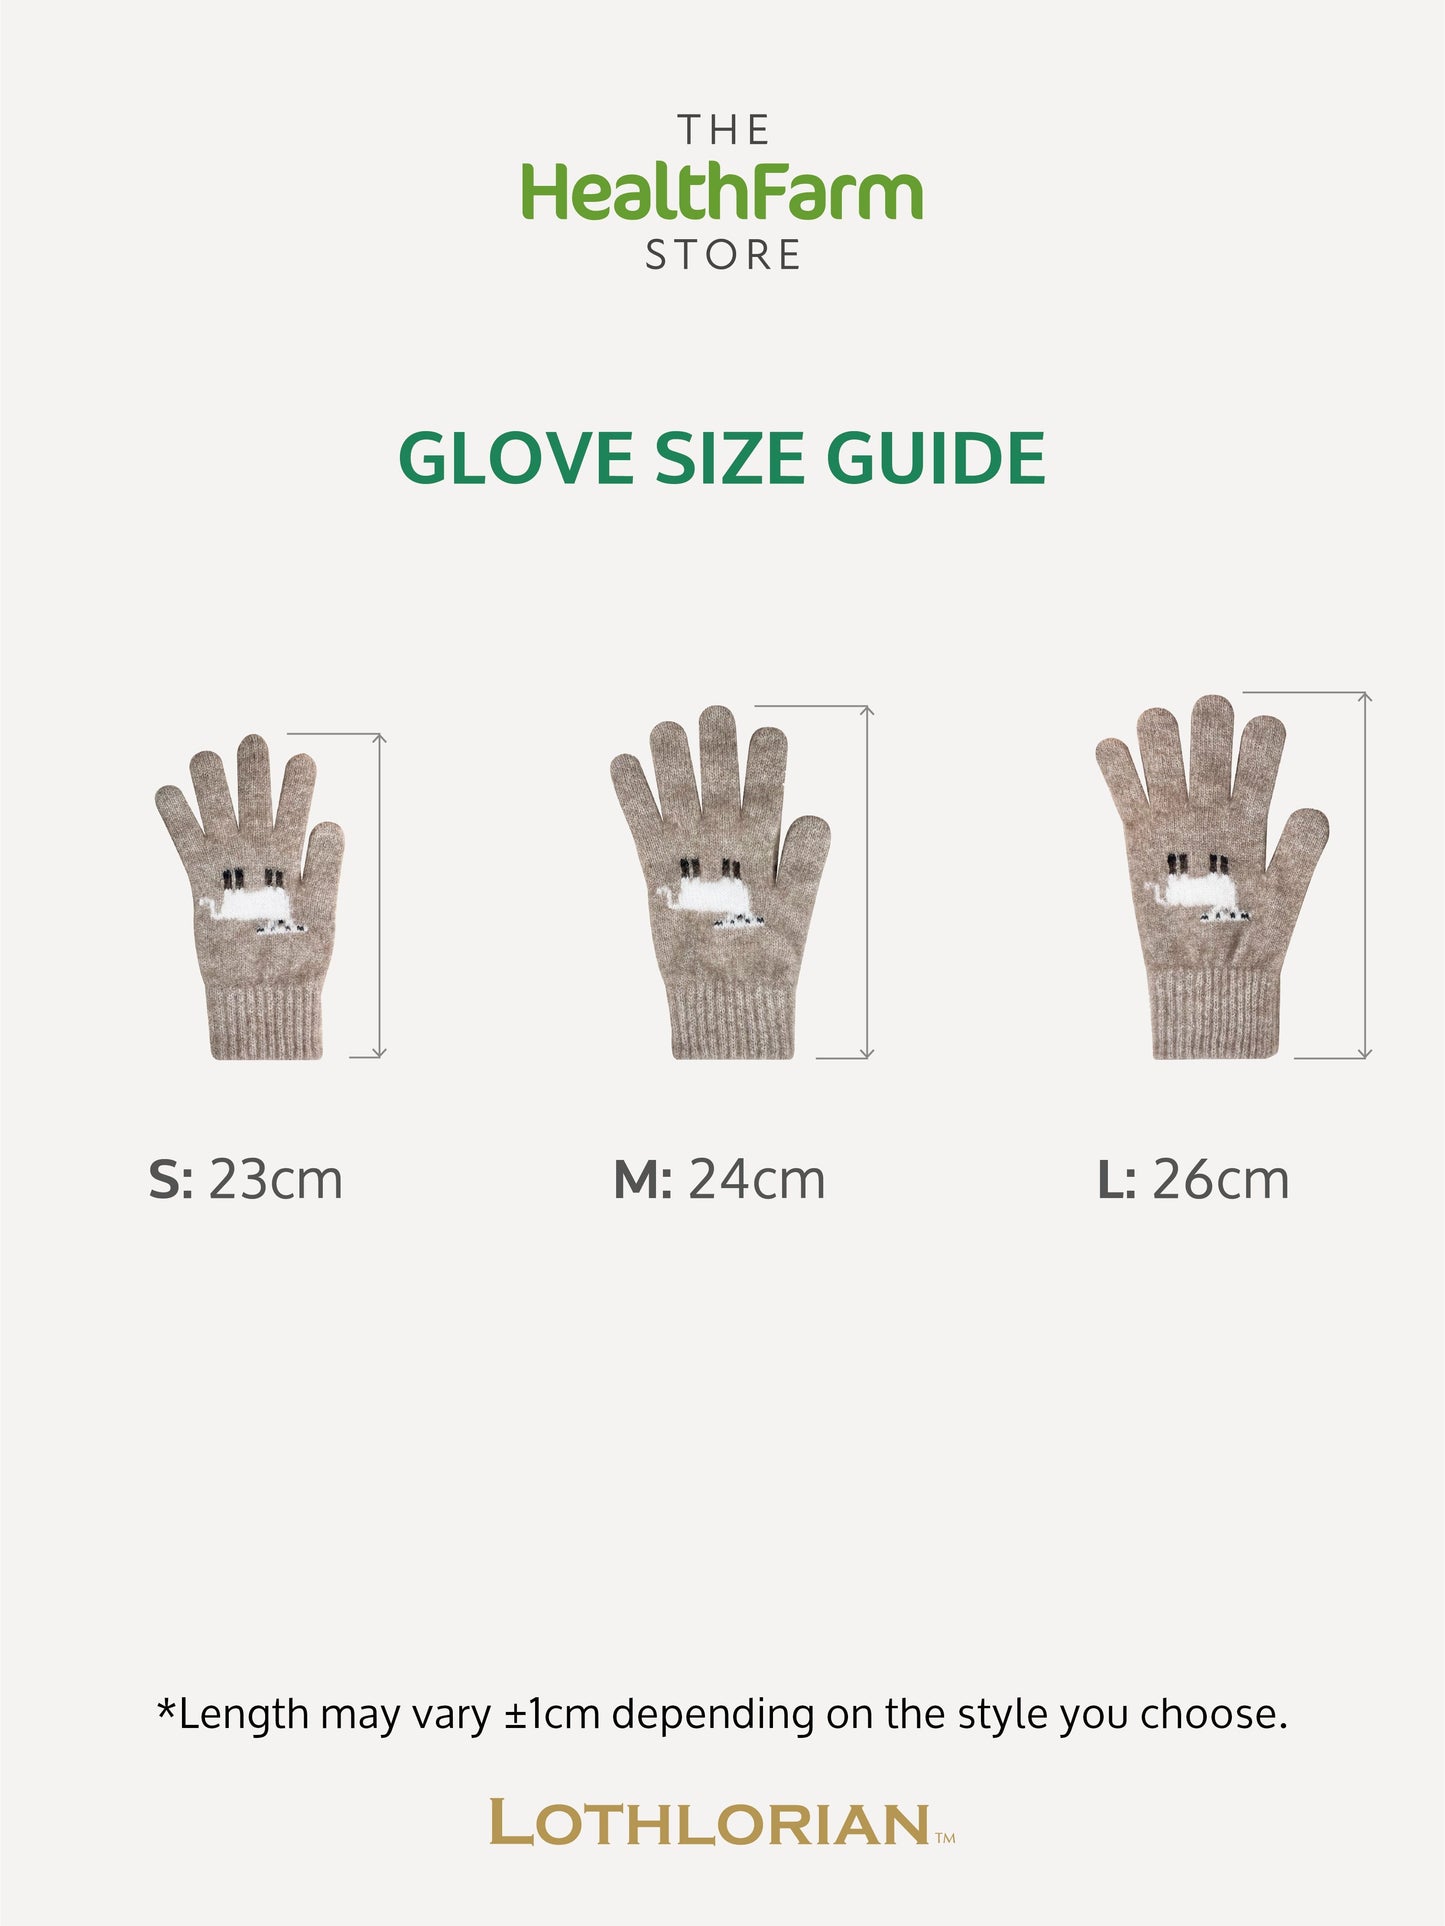 Merino & Possum Accent Stripe Glove [9894]